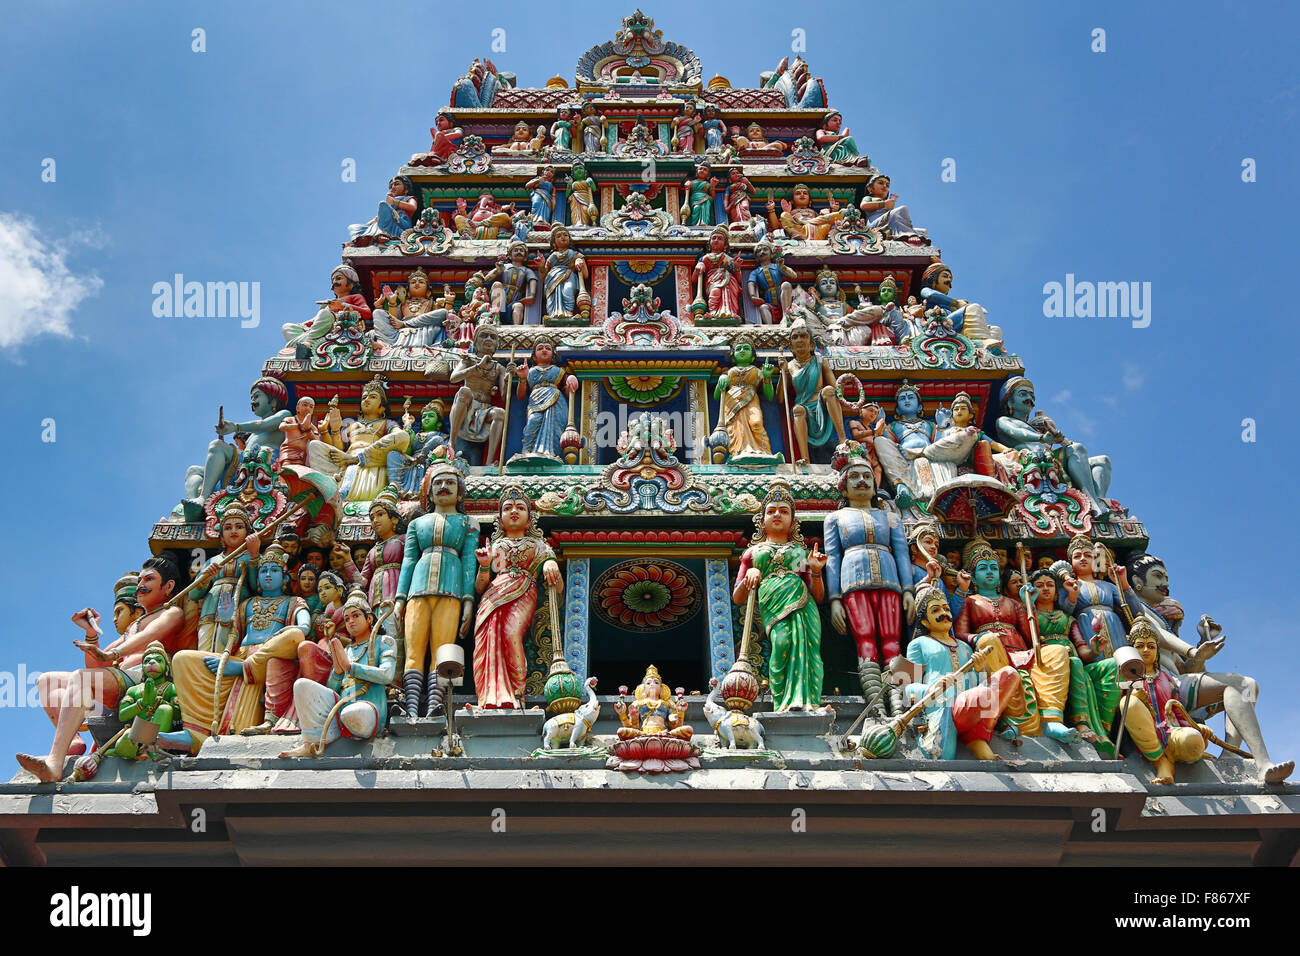 Decorations on the doorway of Sri Mariamman Hindu Temple, Singapore, Republic of Singapore Stock Photo